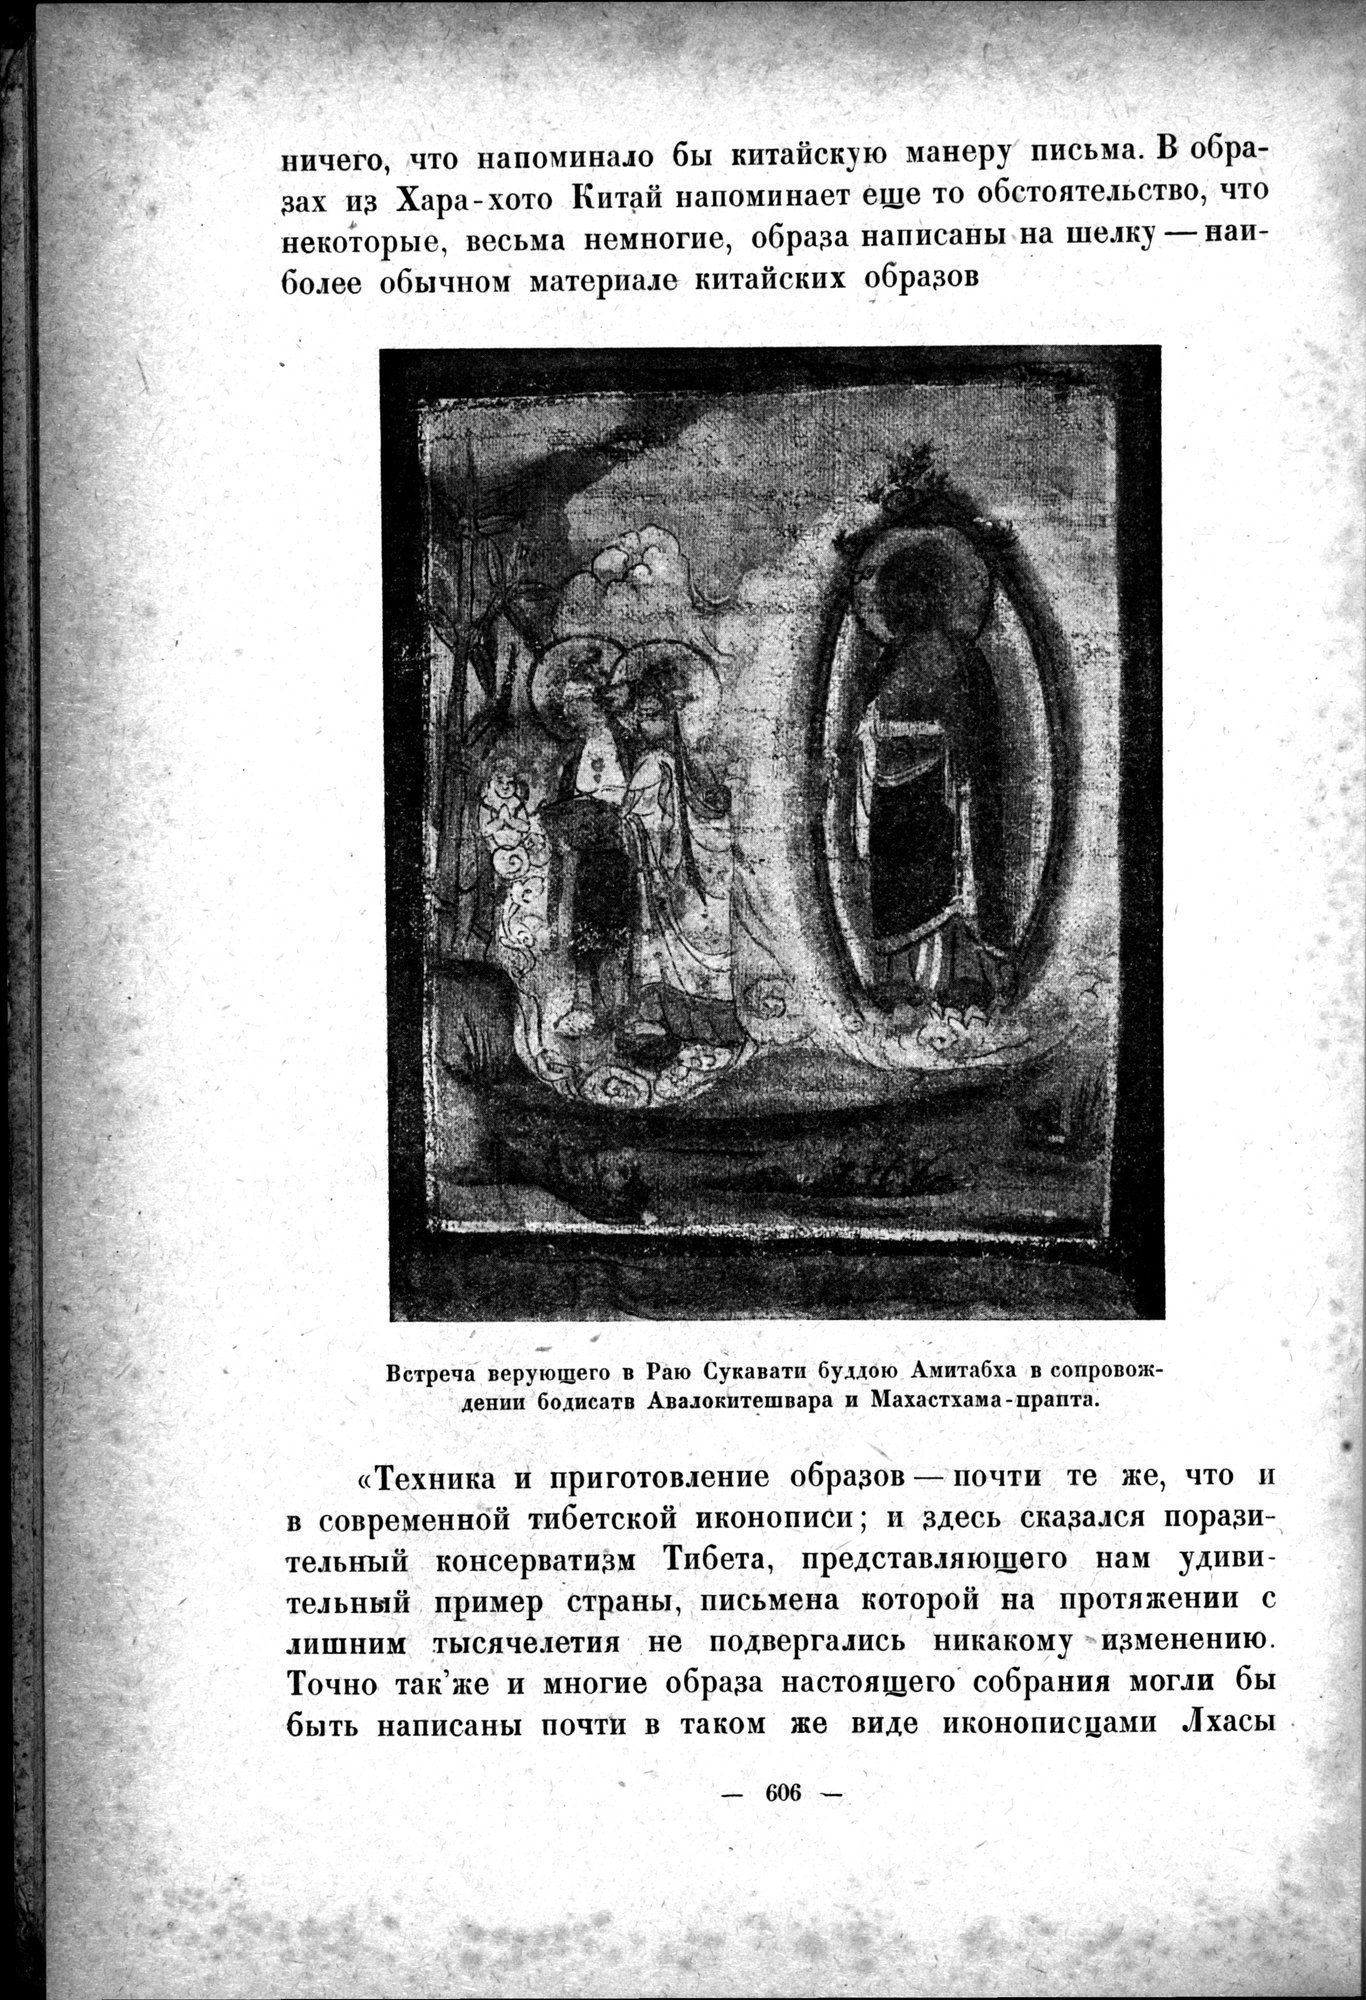 Mongoliya i Amdo i mertby gorod Khara-Khoto : vol.1 / Page 692 (Grayscale High Resolution Image)